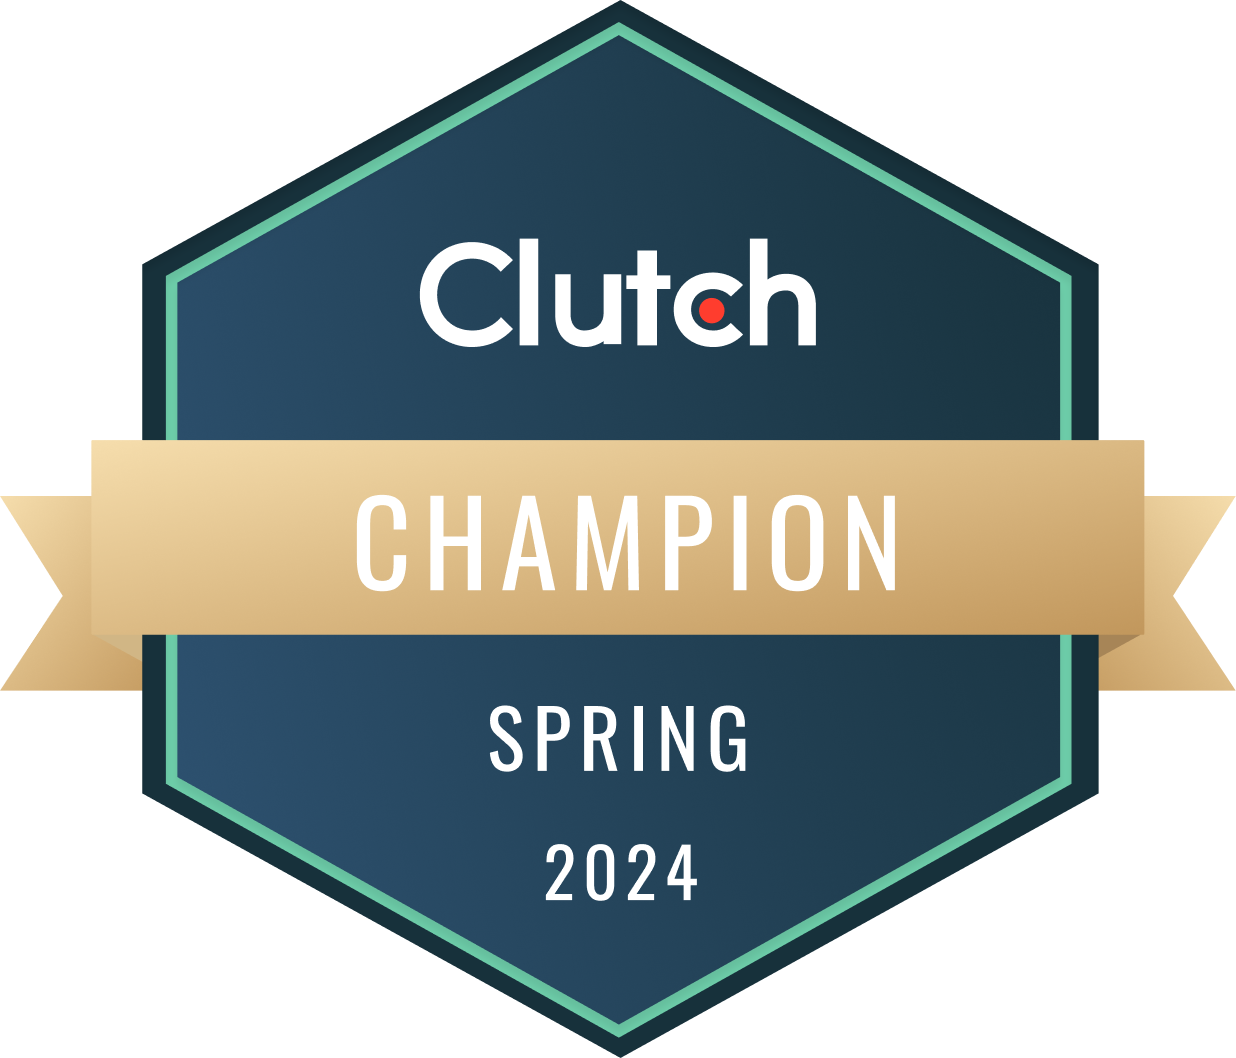 champion clutch 2024